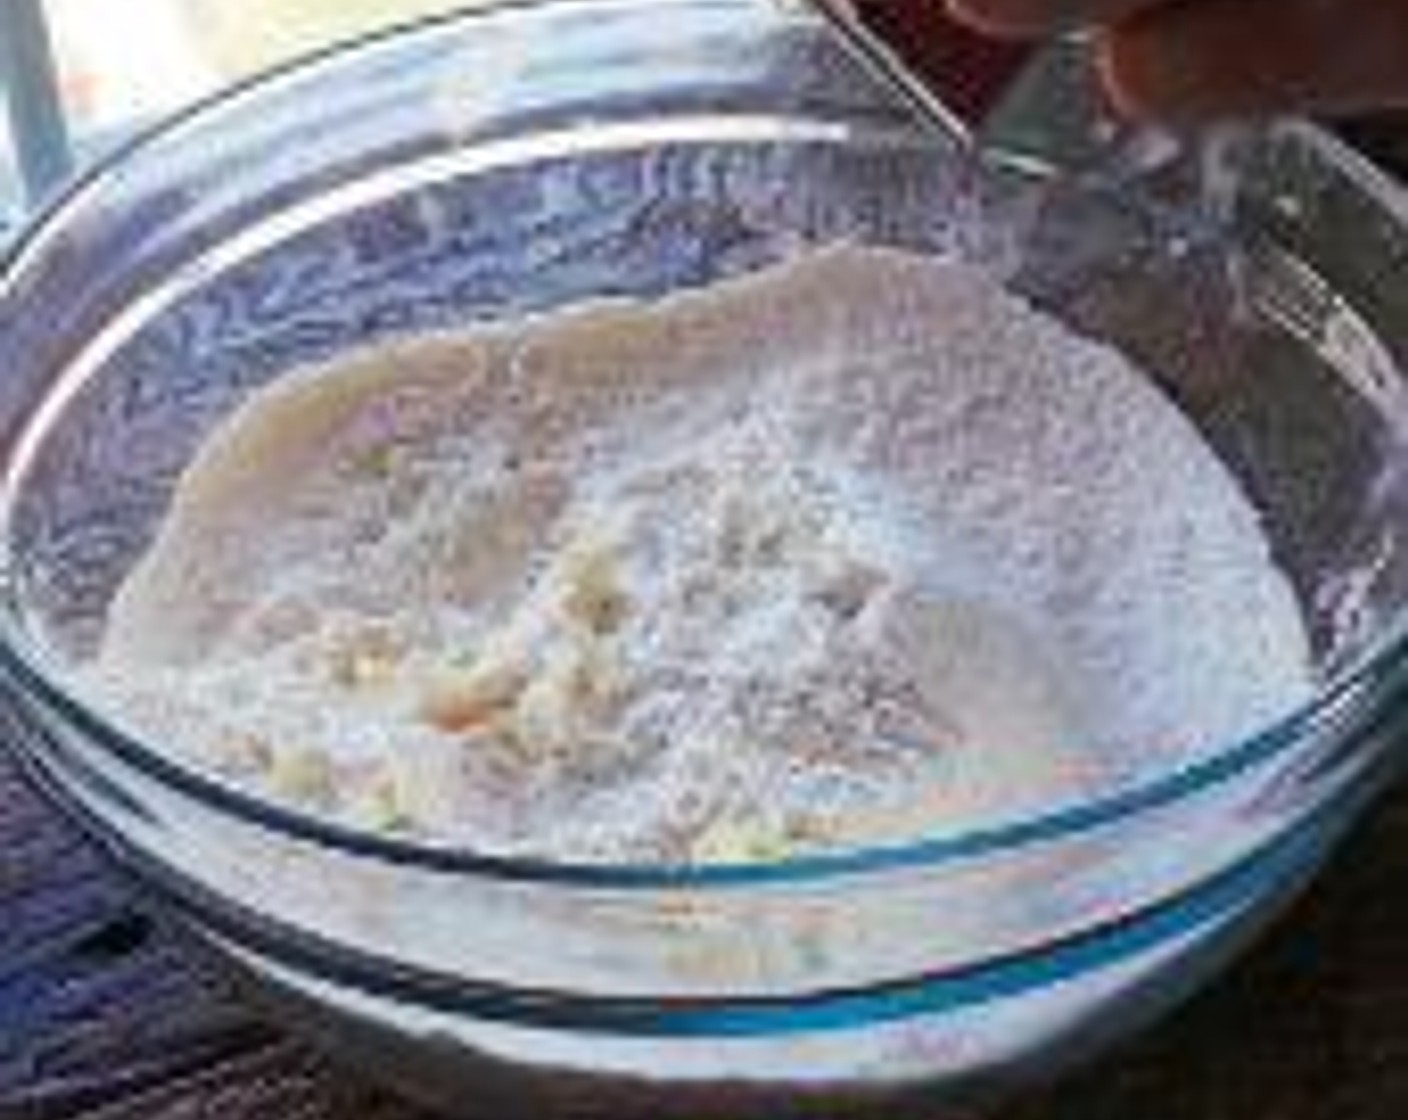 step 2 Sift together the All-Purpose Flour (2 cups), Baking Powder (1 Tbsp), Pumpkin Pie Spice (1 tsp), Salt (1/2 tsp), and Granulated Sugar (1/4 cup).